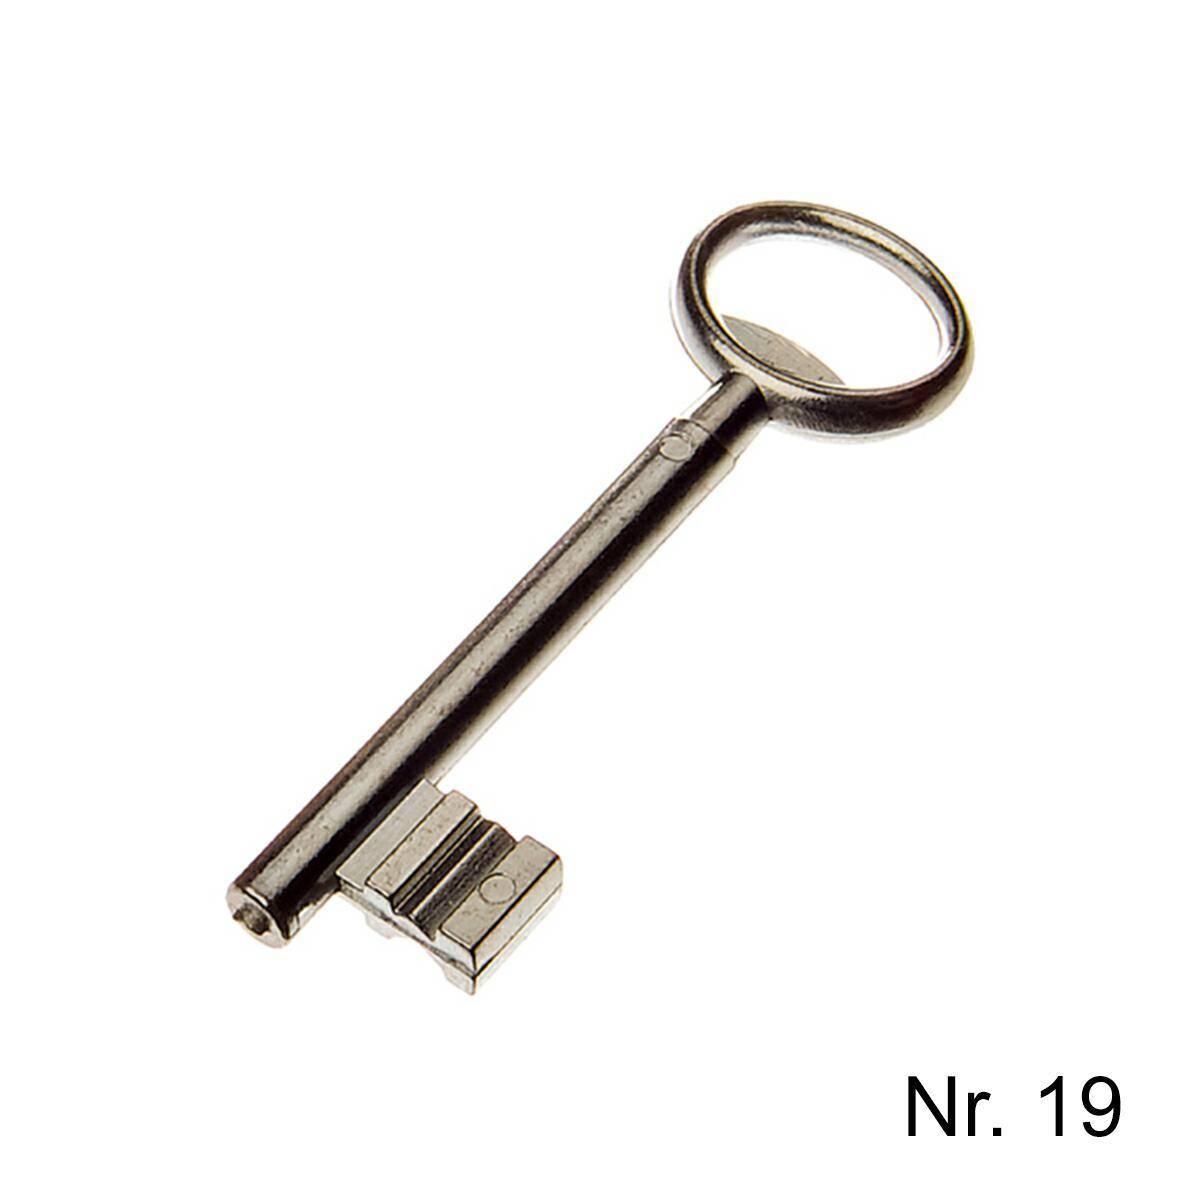 Cast key Jania for the lock - No. 19